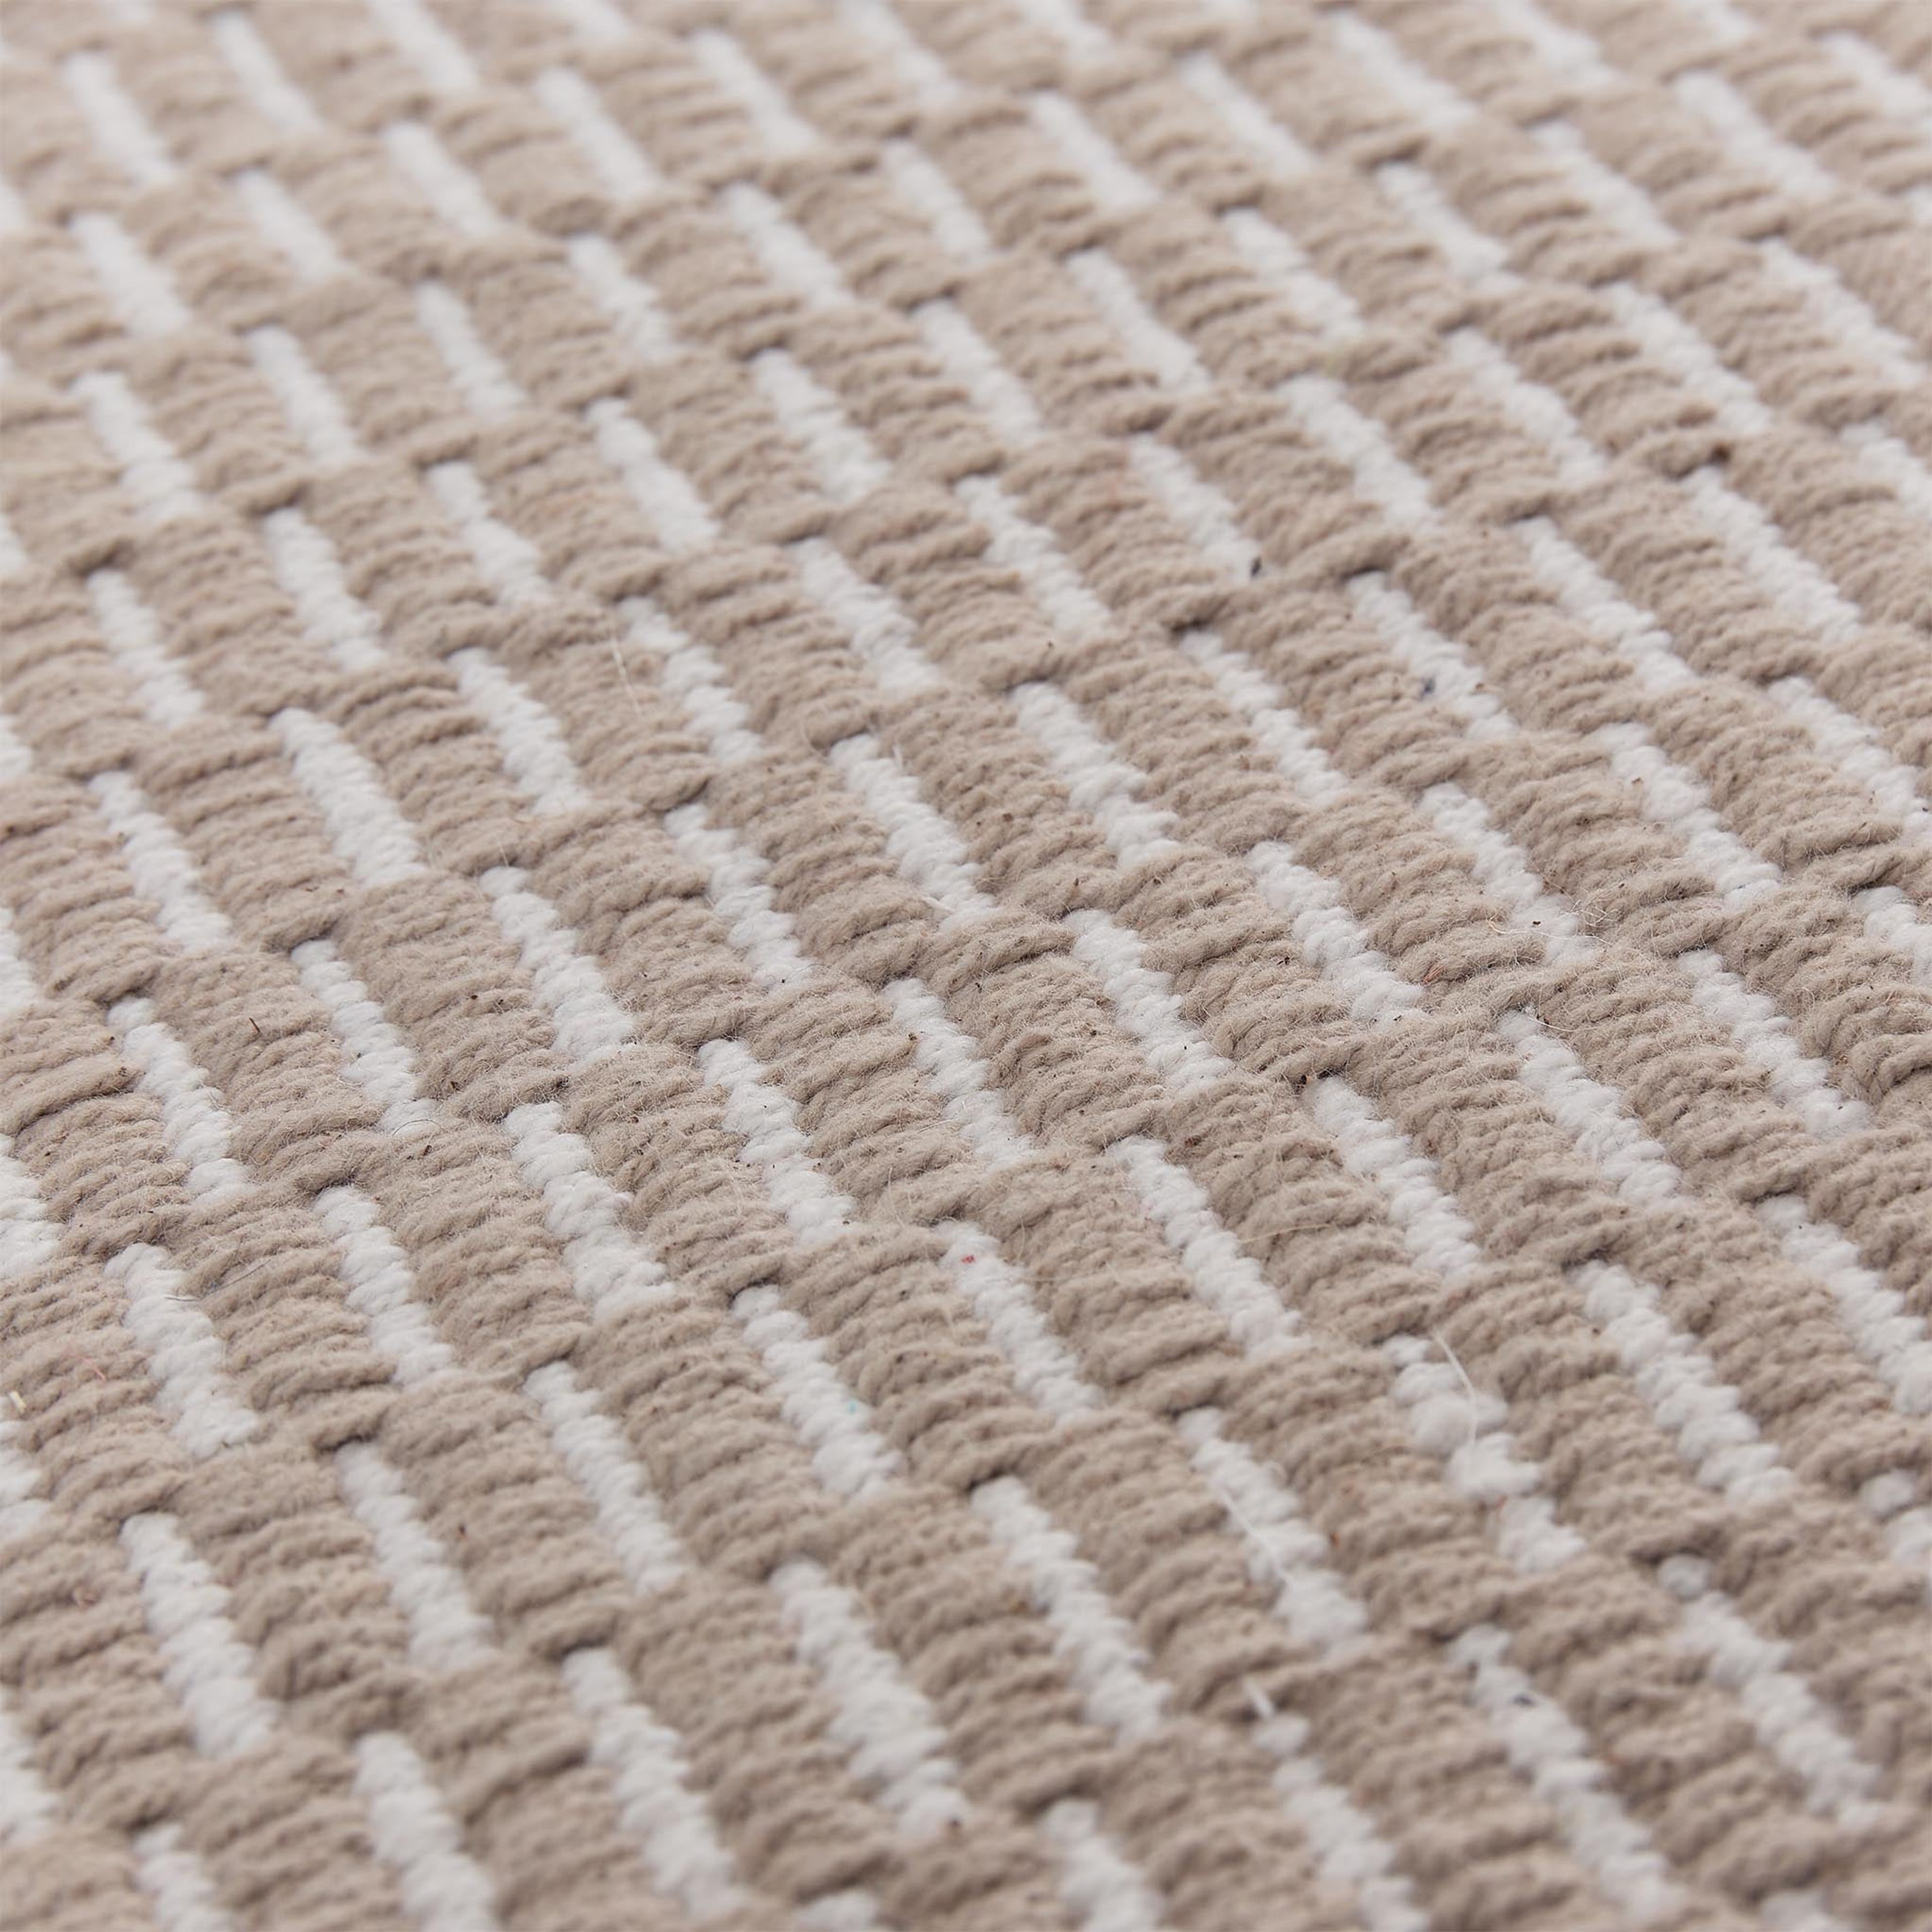 Upani Cotton Rug [Sandstone melange/Natural white]